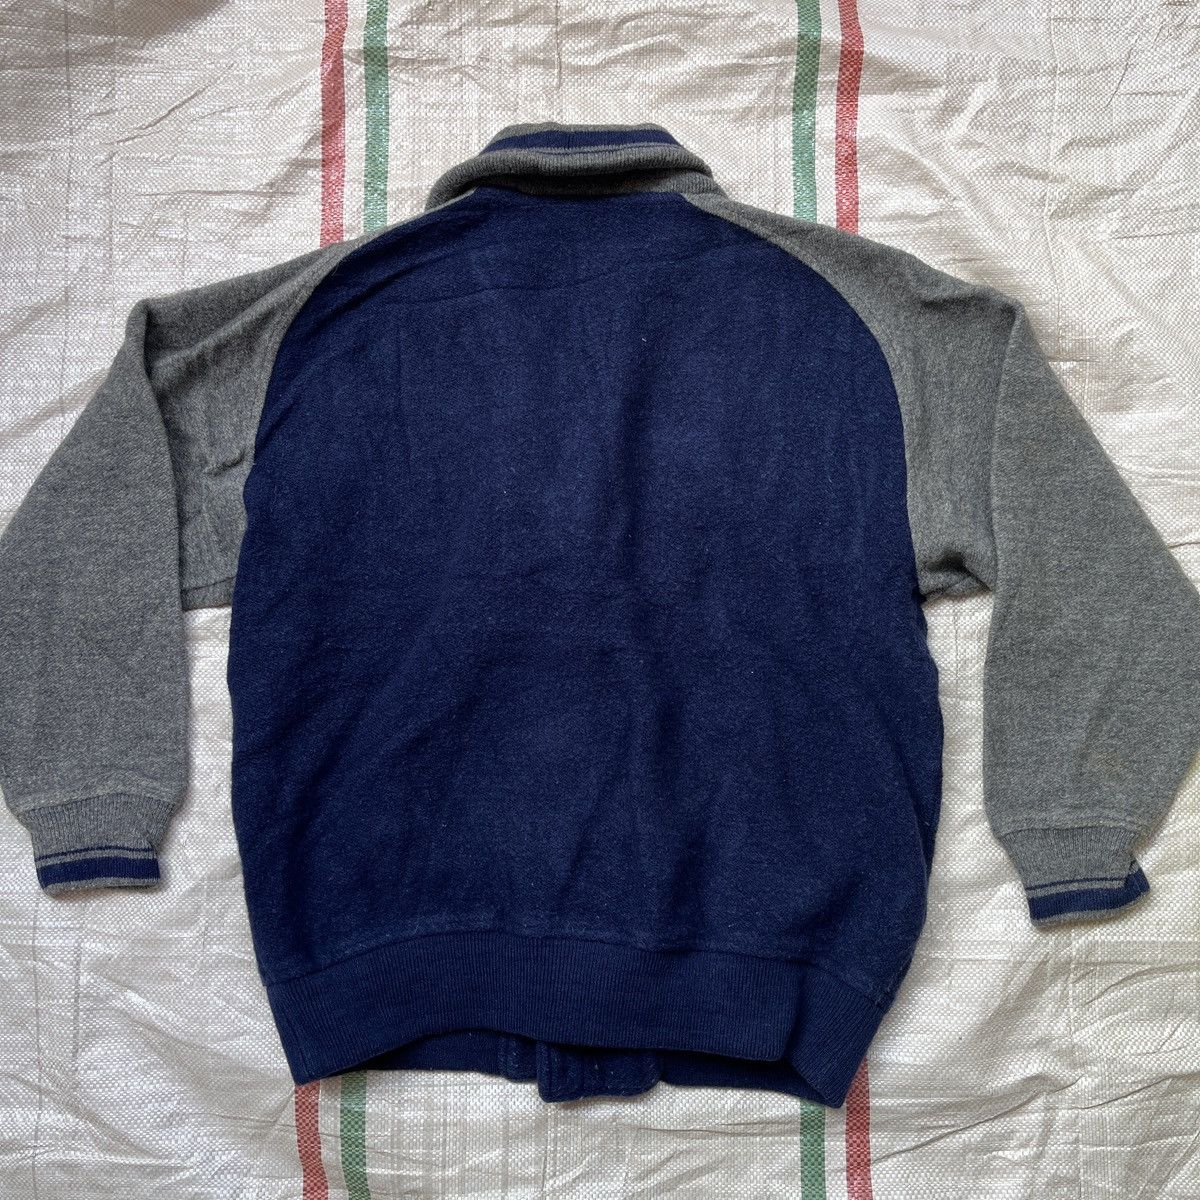 Bomber Style Jacket Lacoste Vintage 80s Sweater Japan - 16